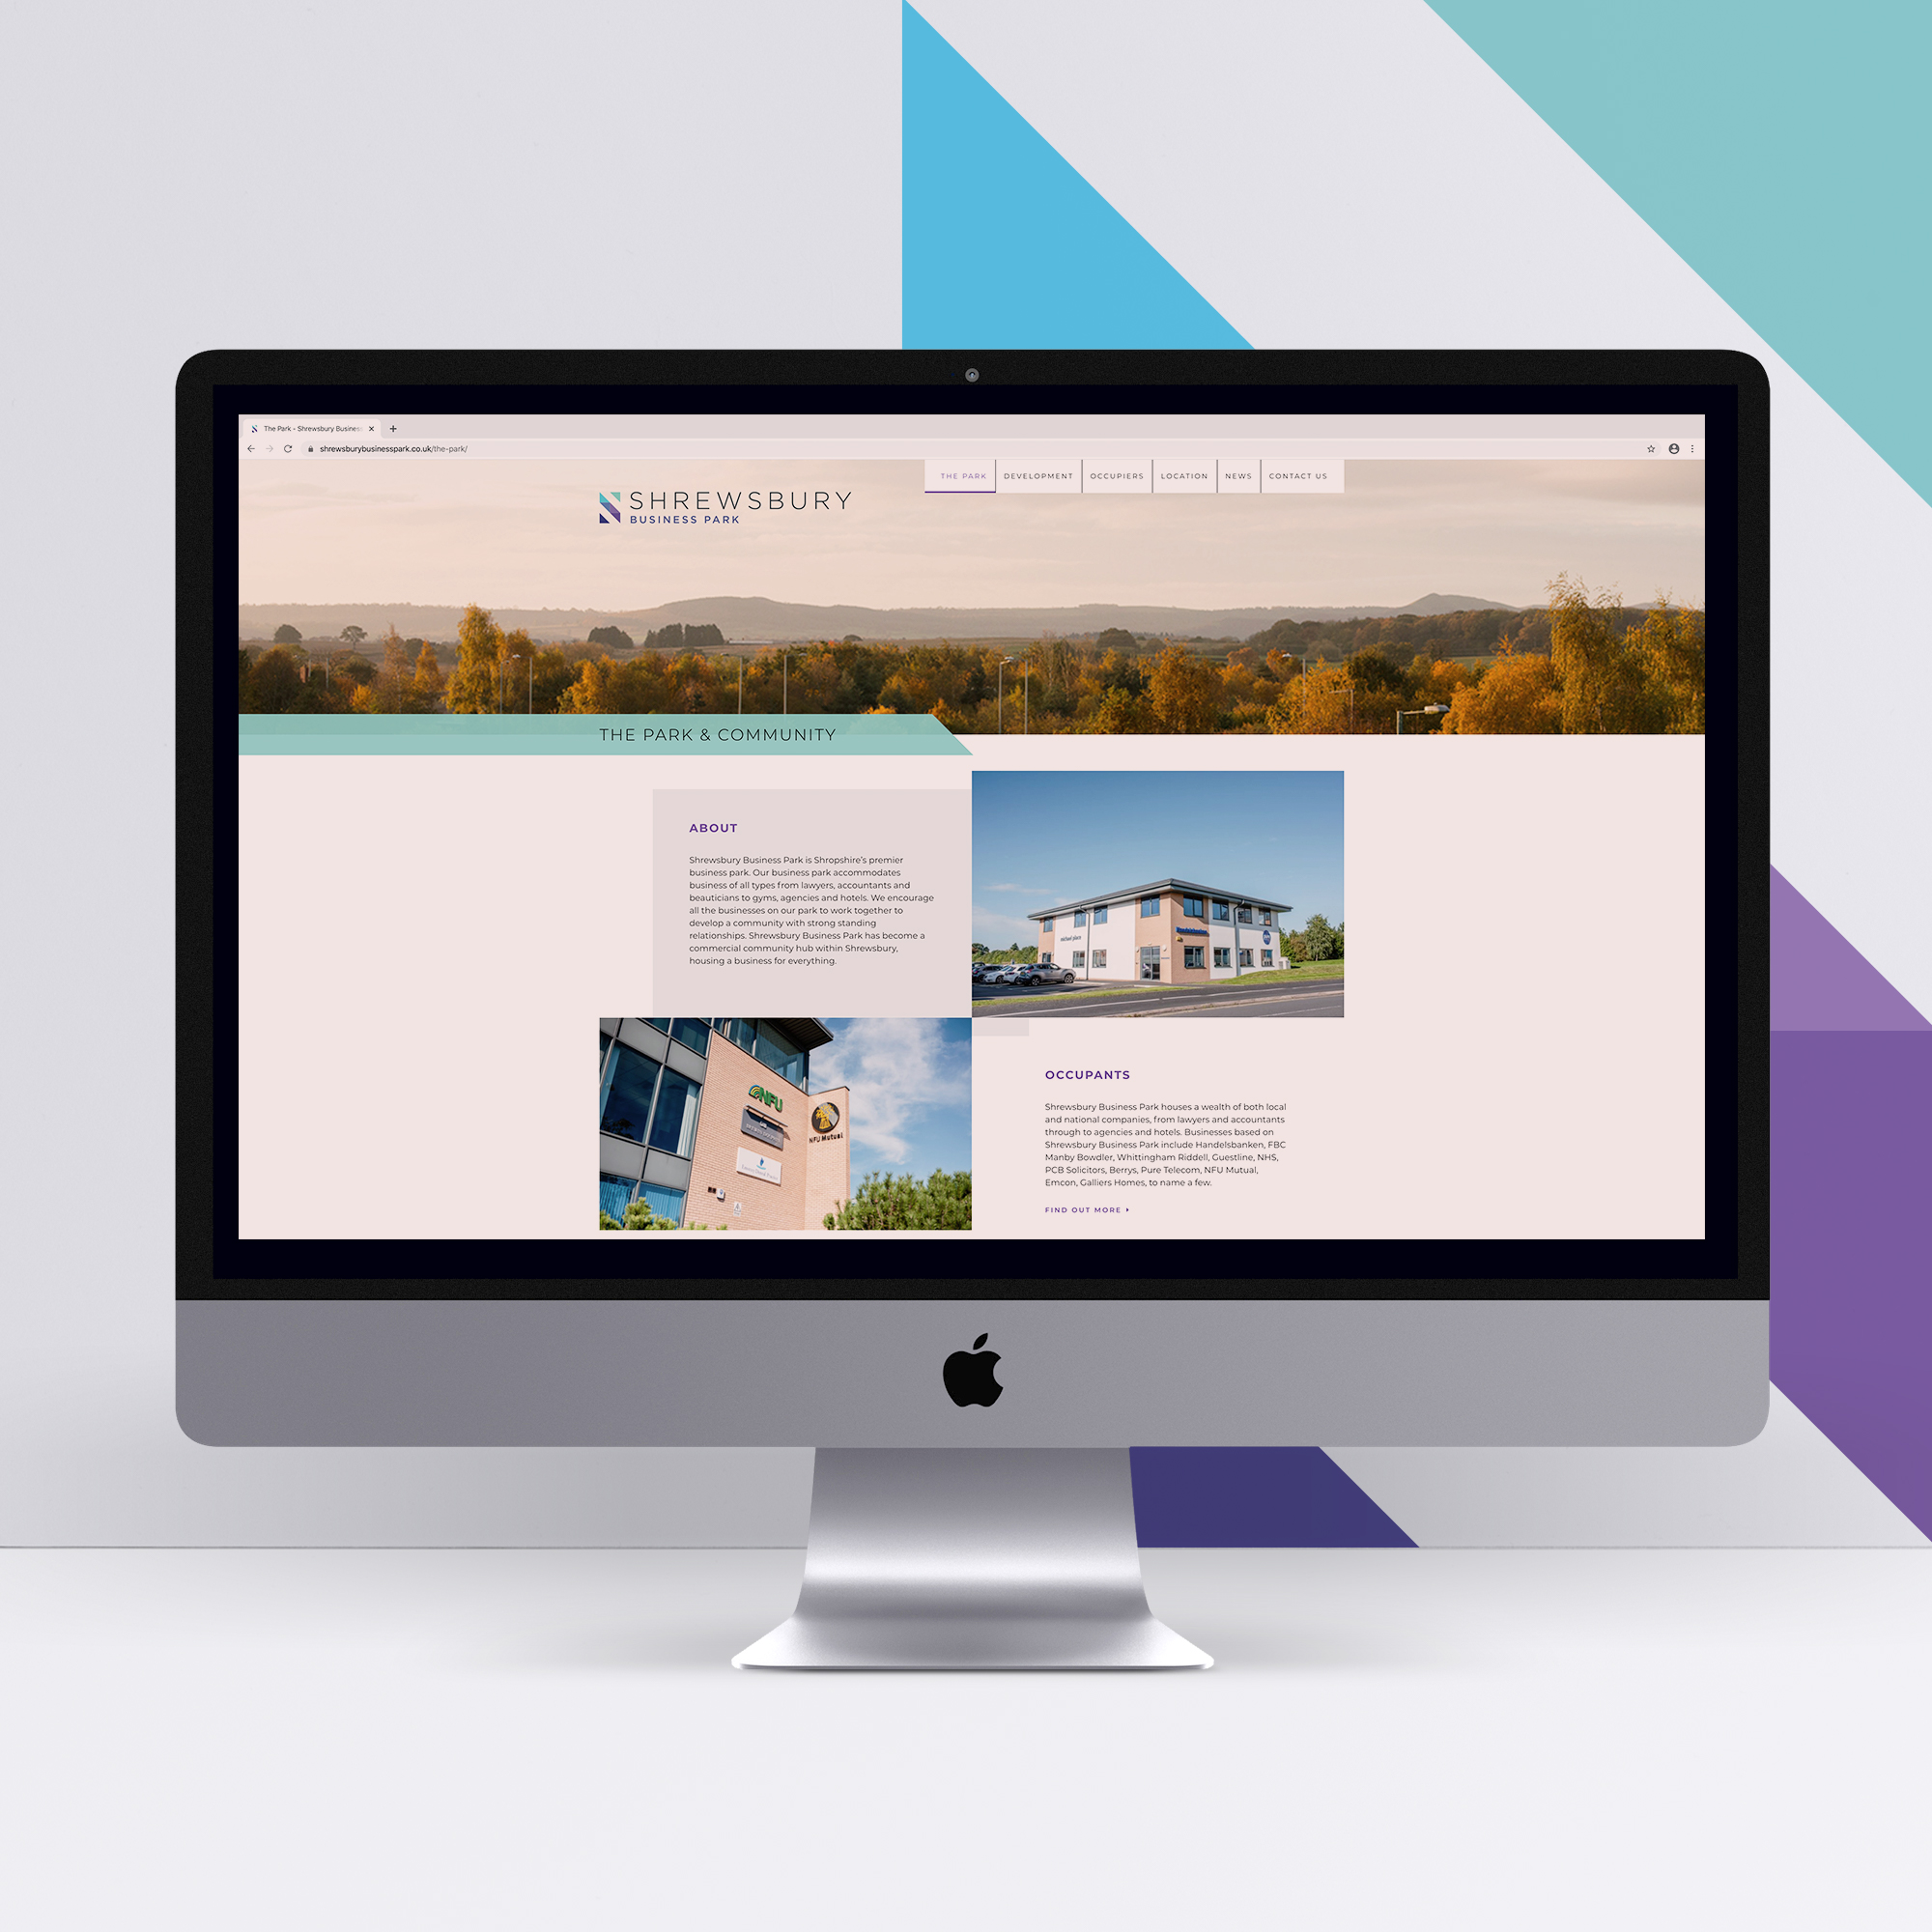 Shrewsbury Business Park website